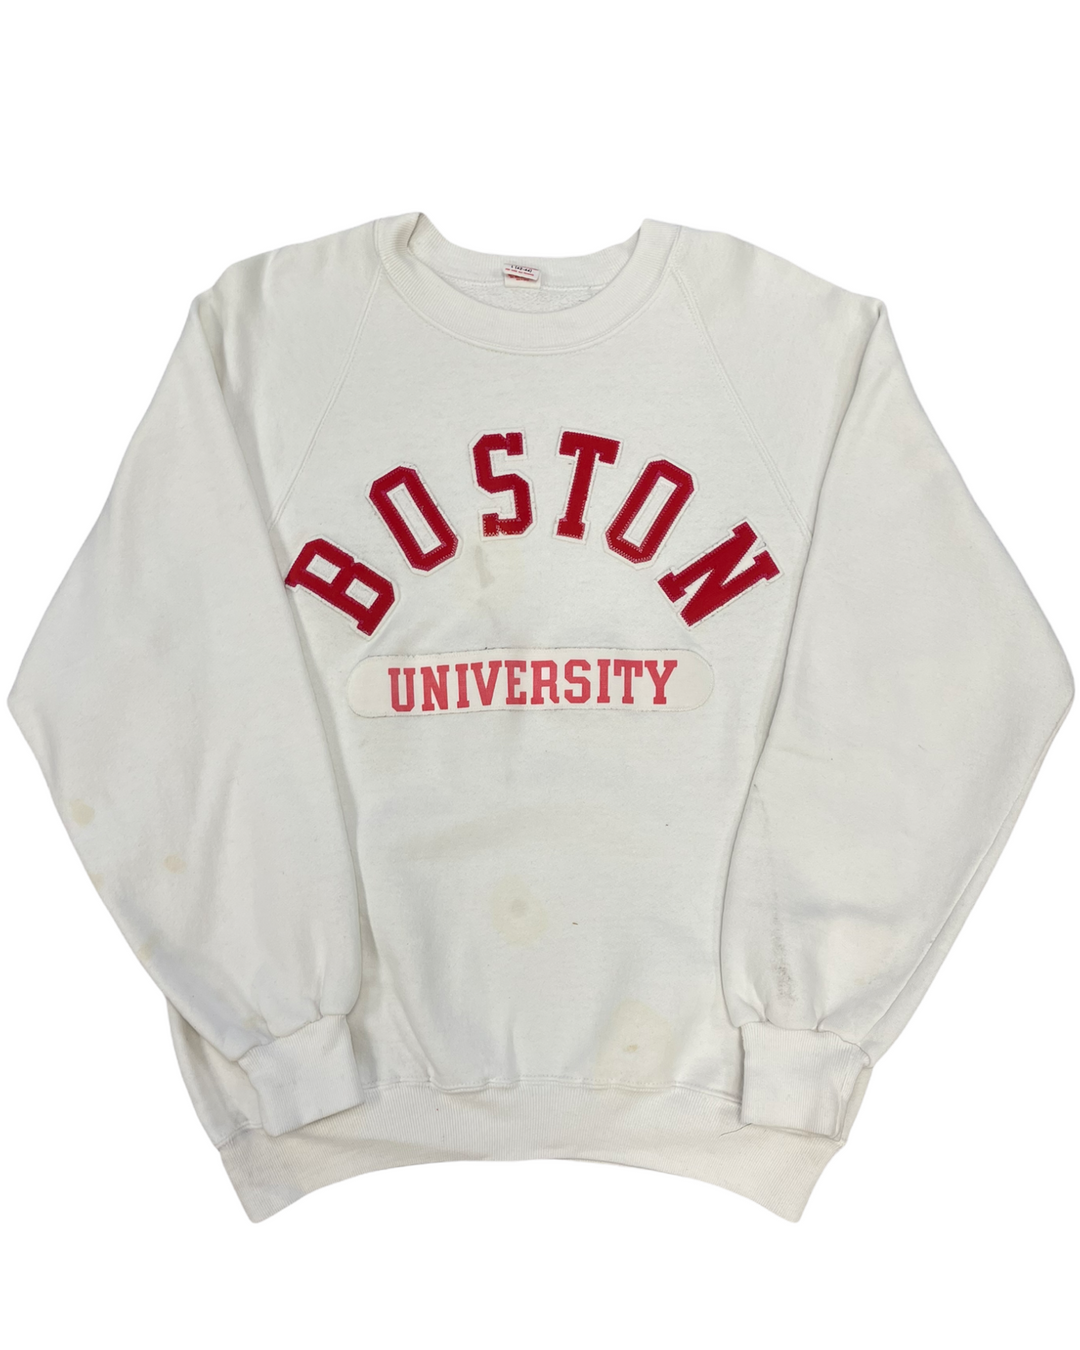 Boston University Vintage Sweatshirt